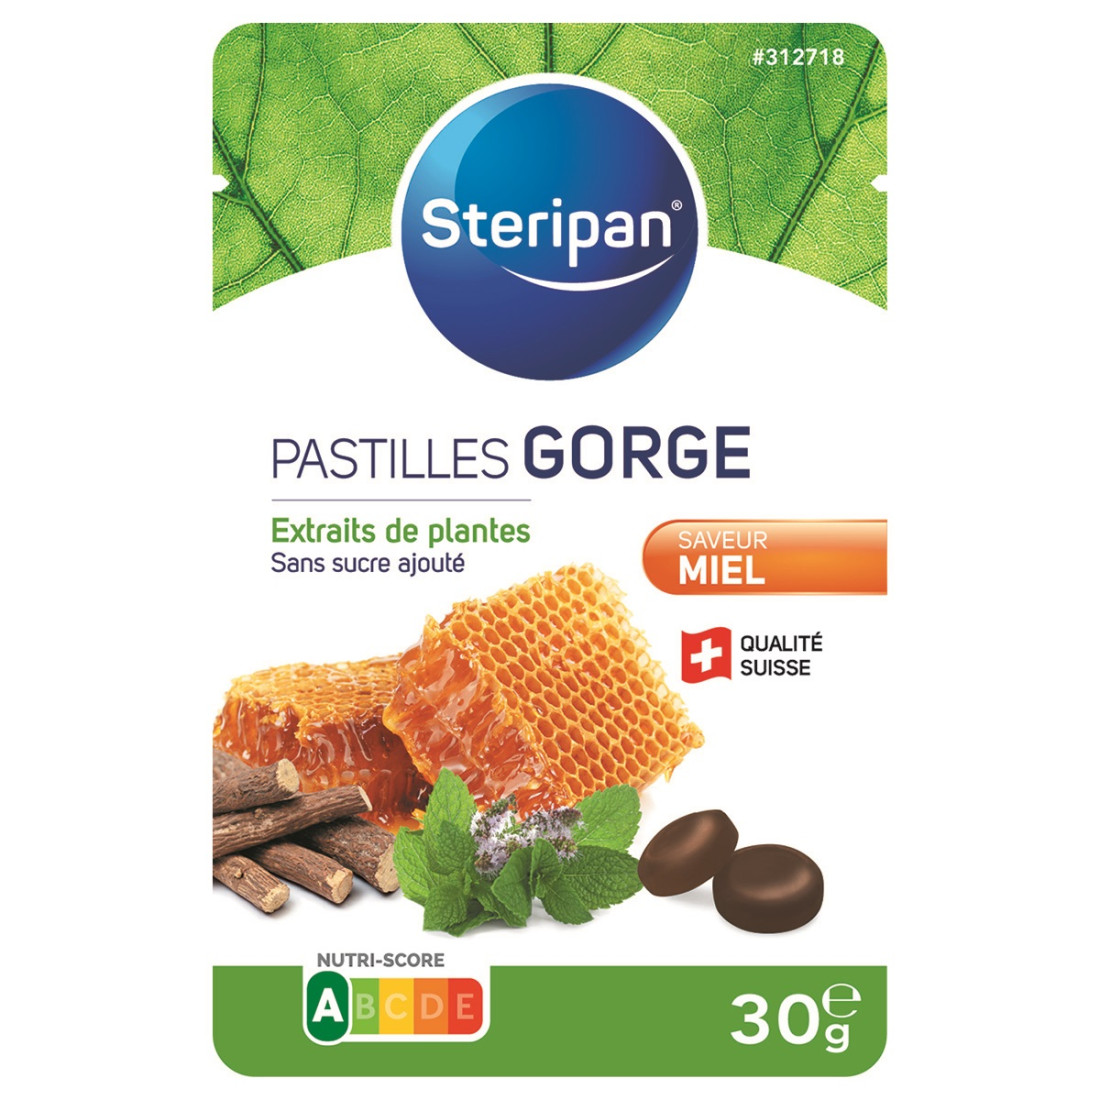 Pastilles Gorge - Steripan